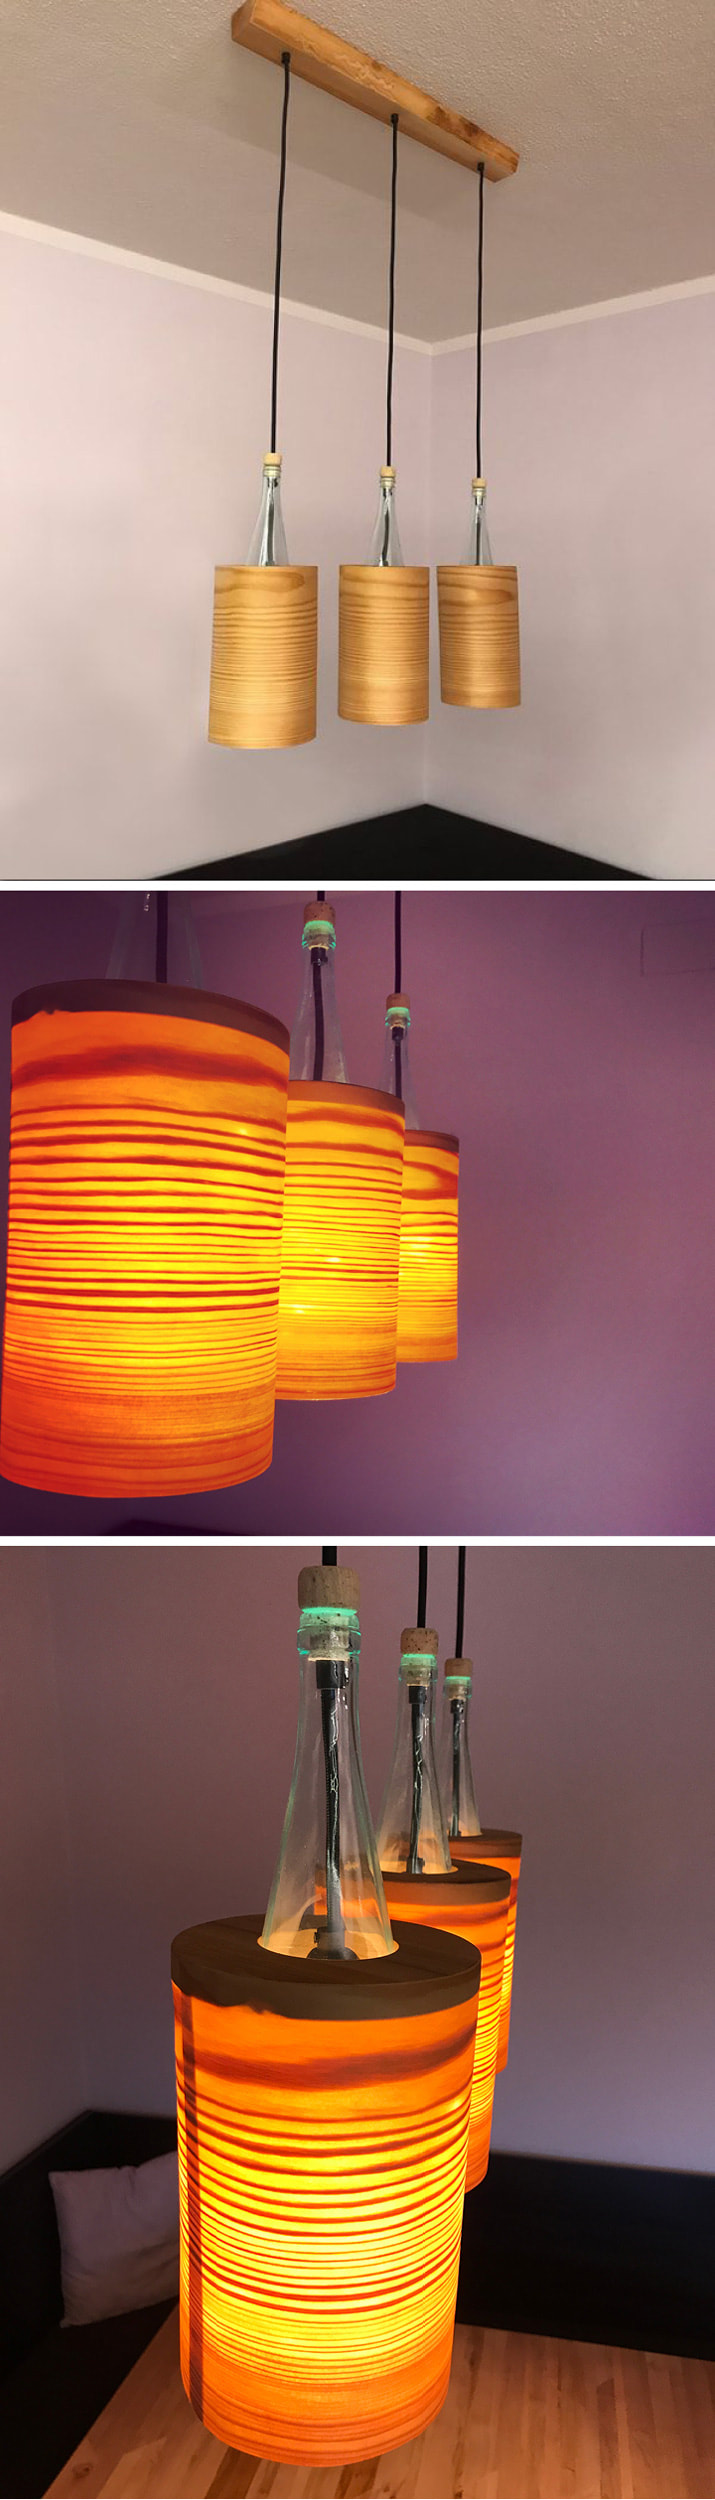 Product design hanging lamp